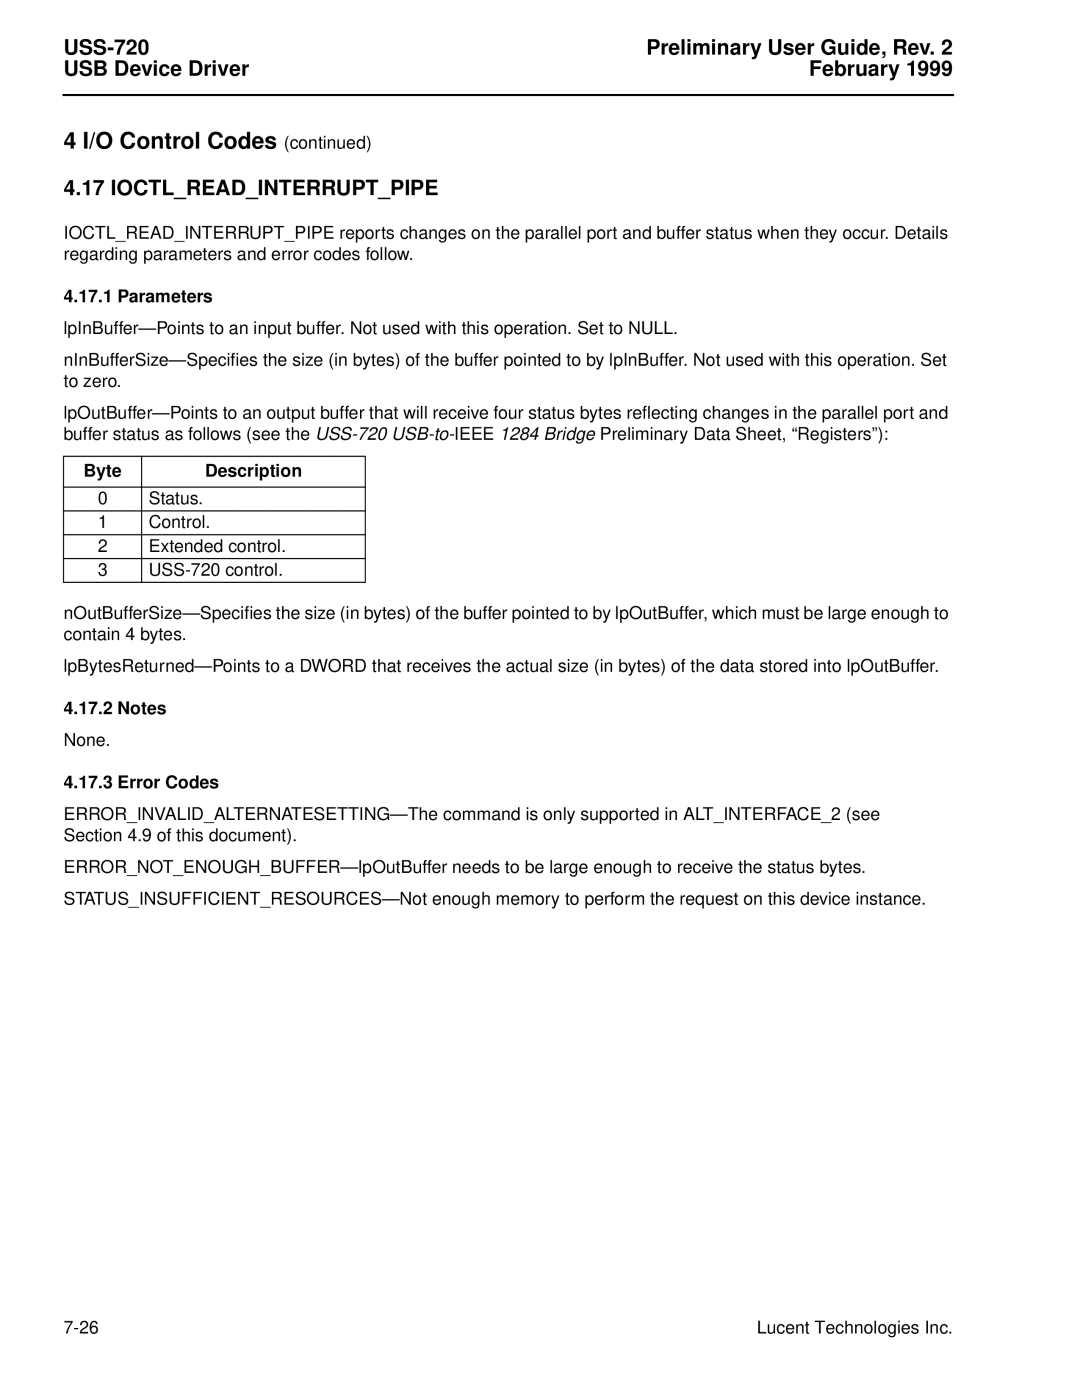 Lucent Technologies USS-720 Ioctlreadinterruptpipe, 4 I/O Control Codes continued, Preliminary User Guide, Rev, February 